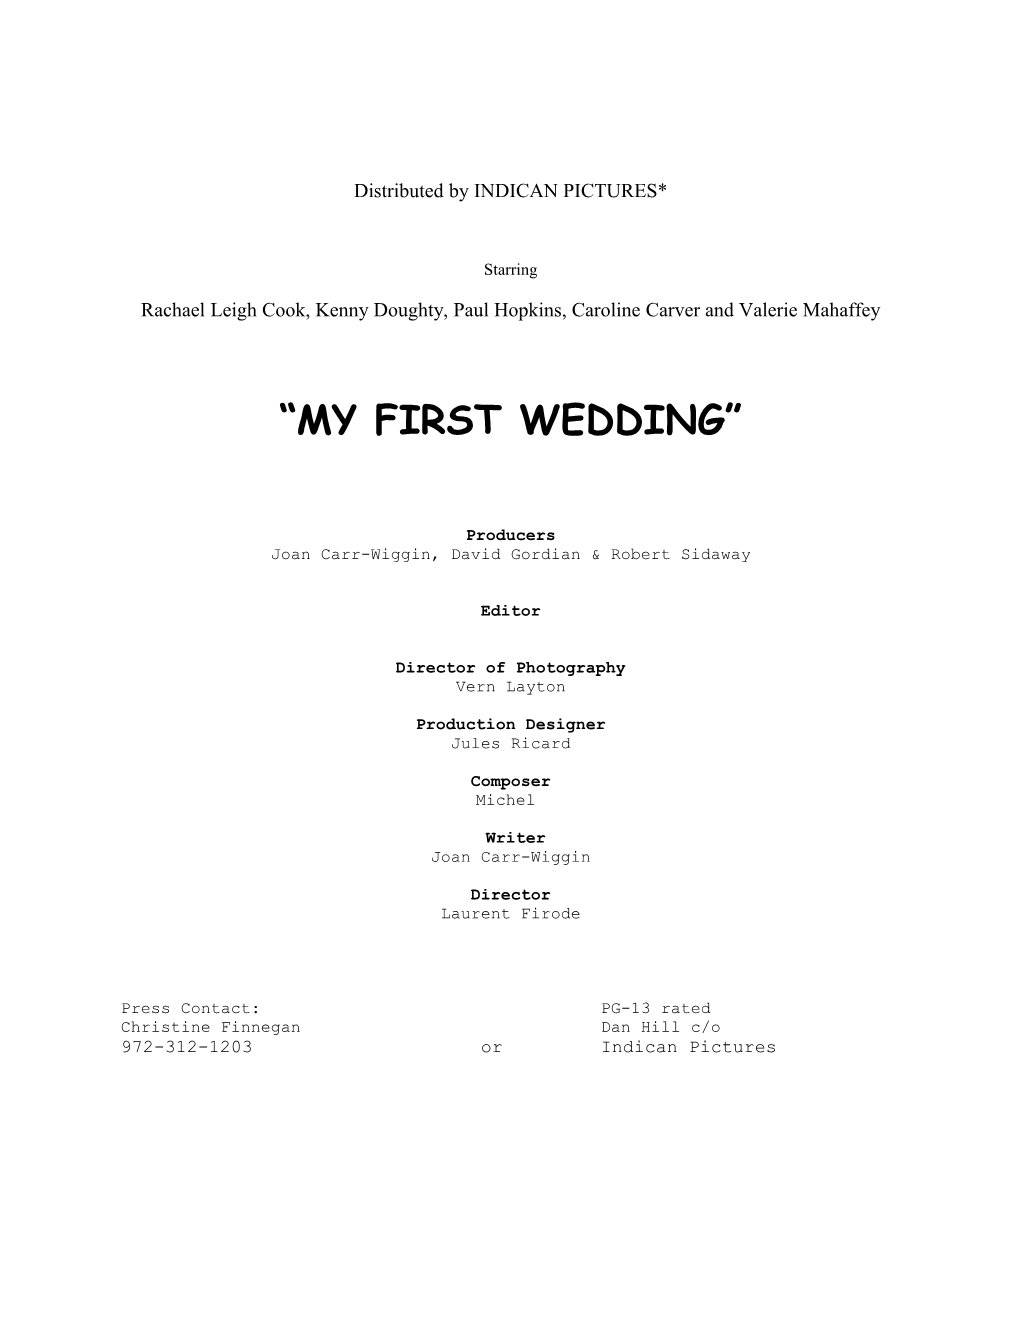 My First Wedding